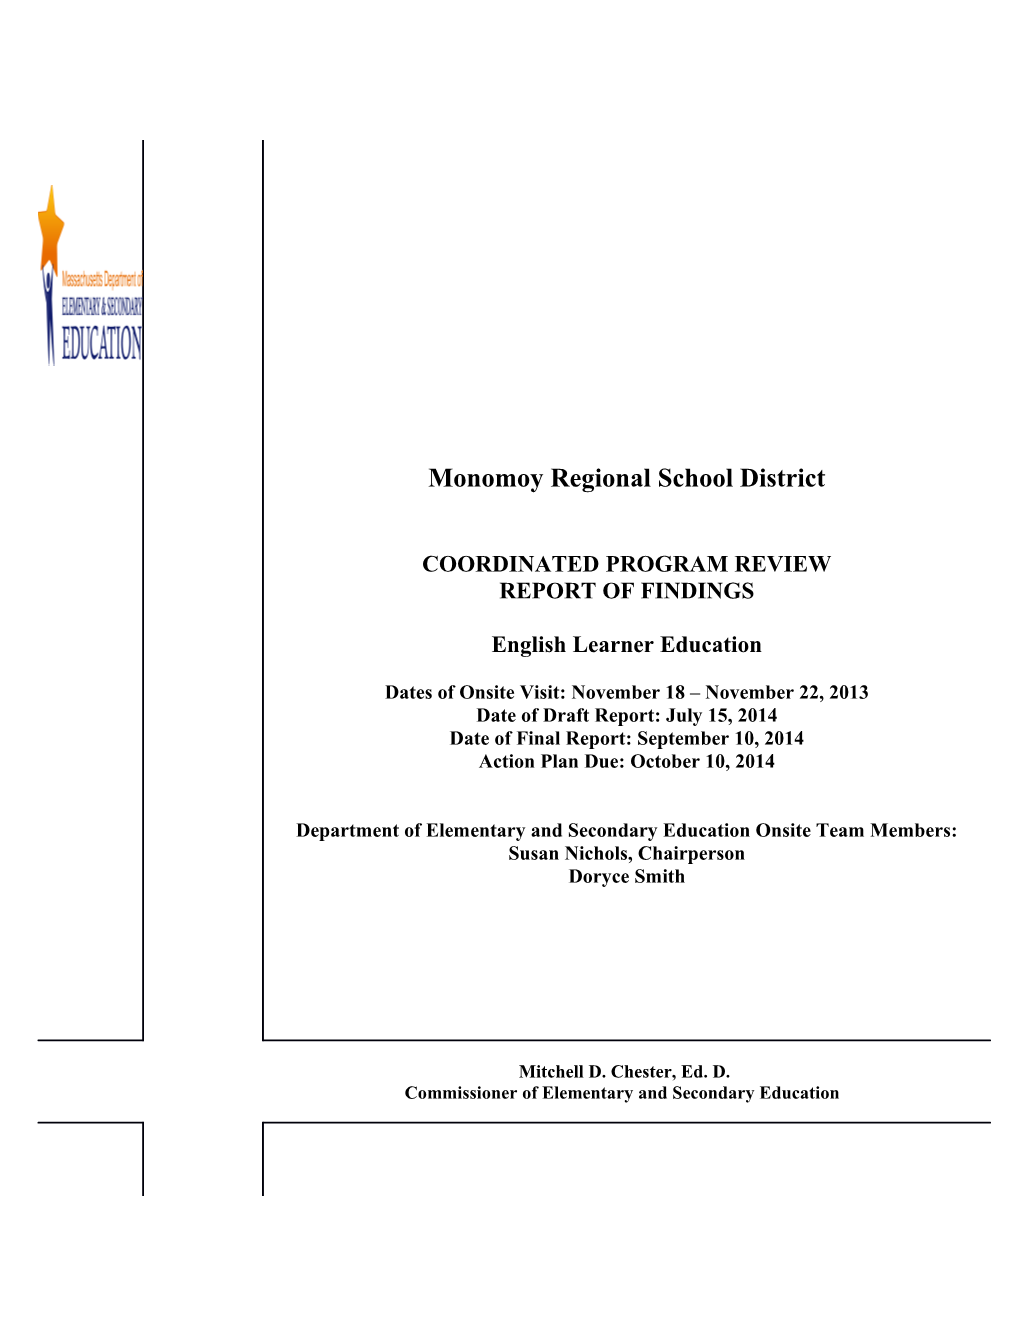 Monomoy Regional School District ELE CPR Final Report 2013-14